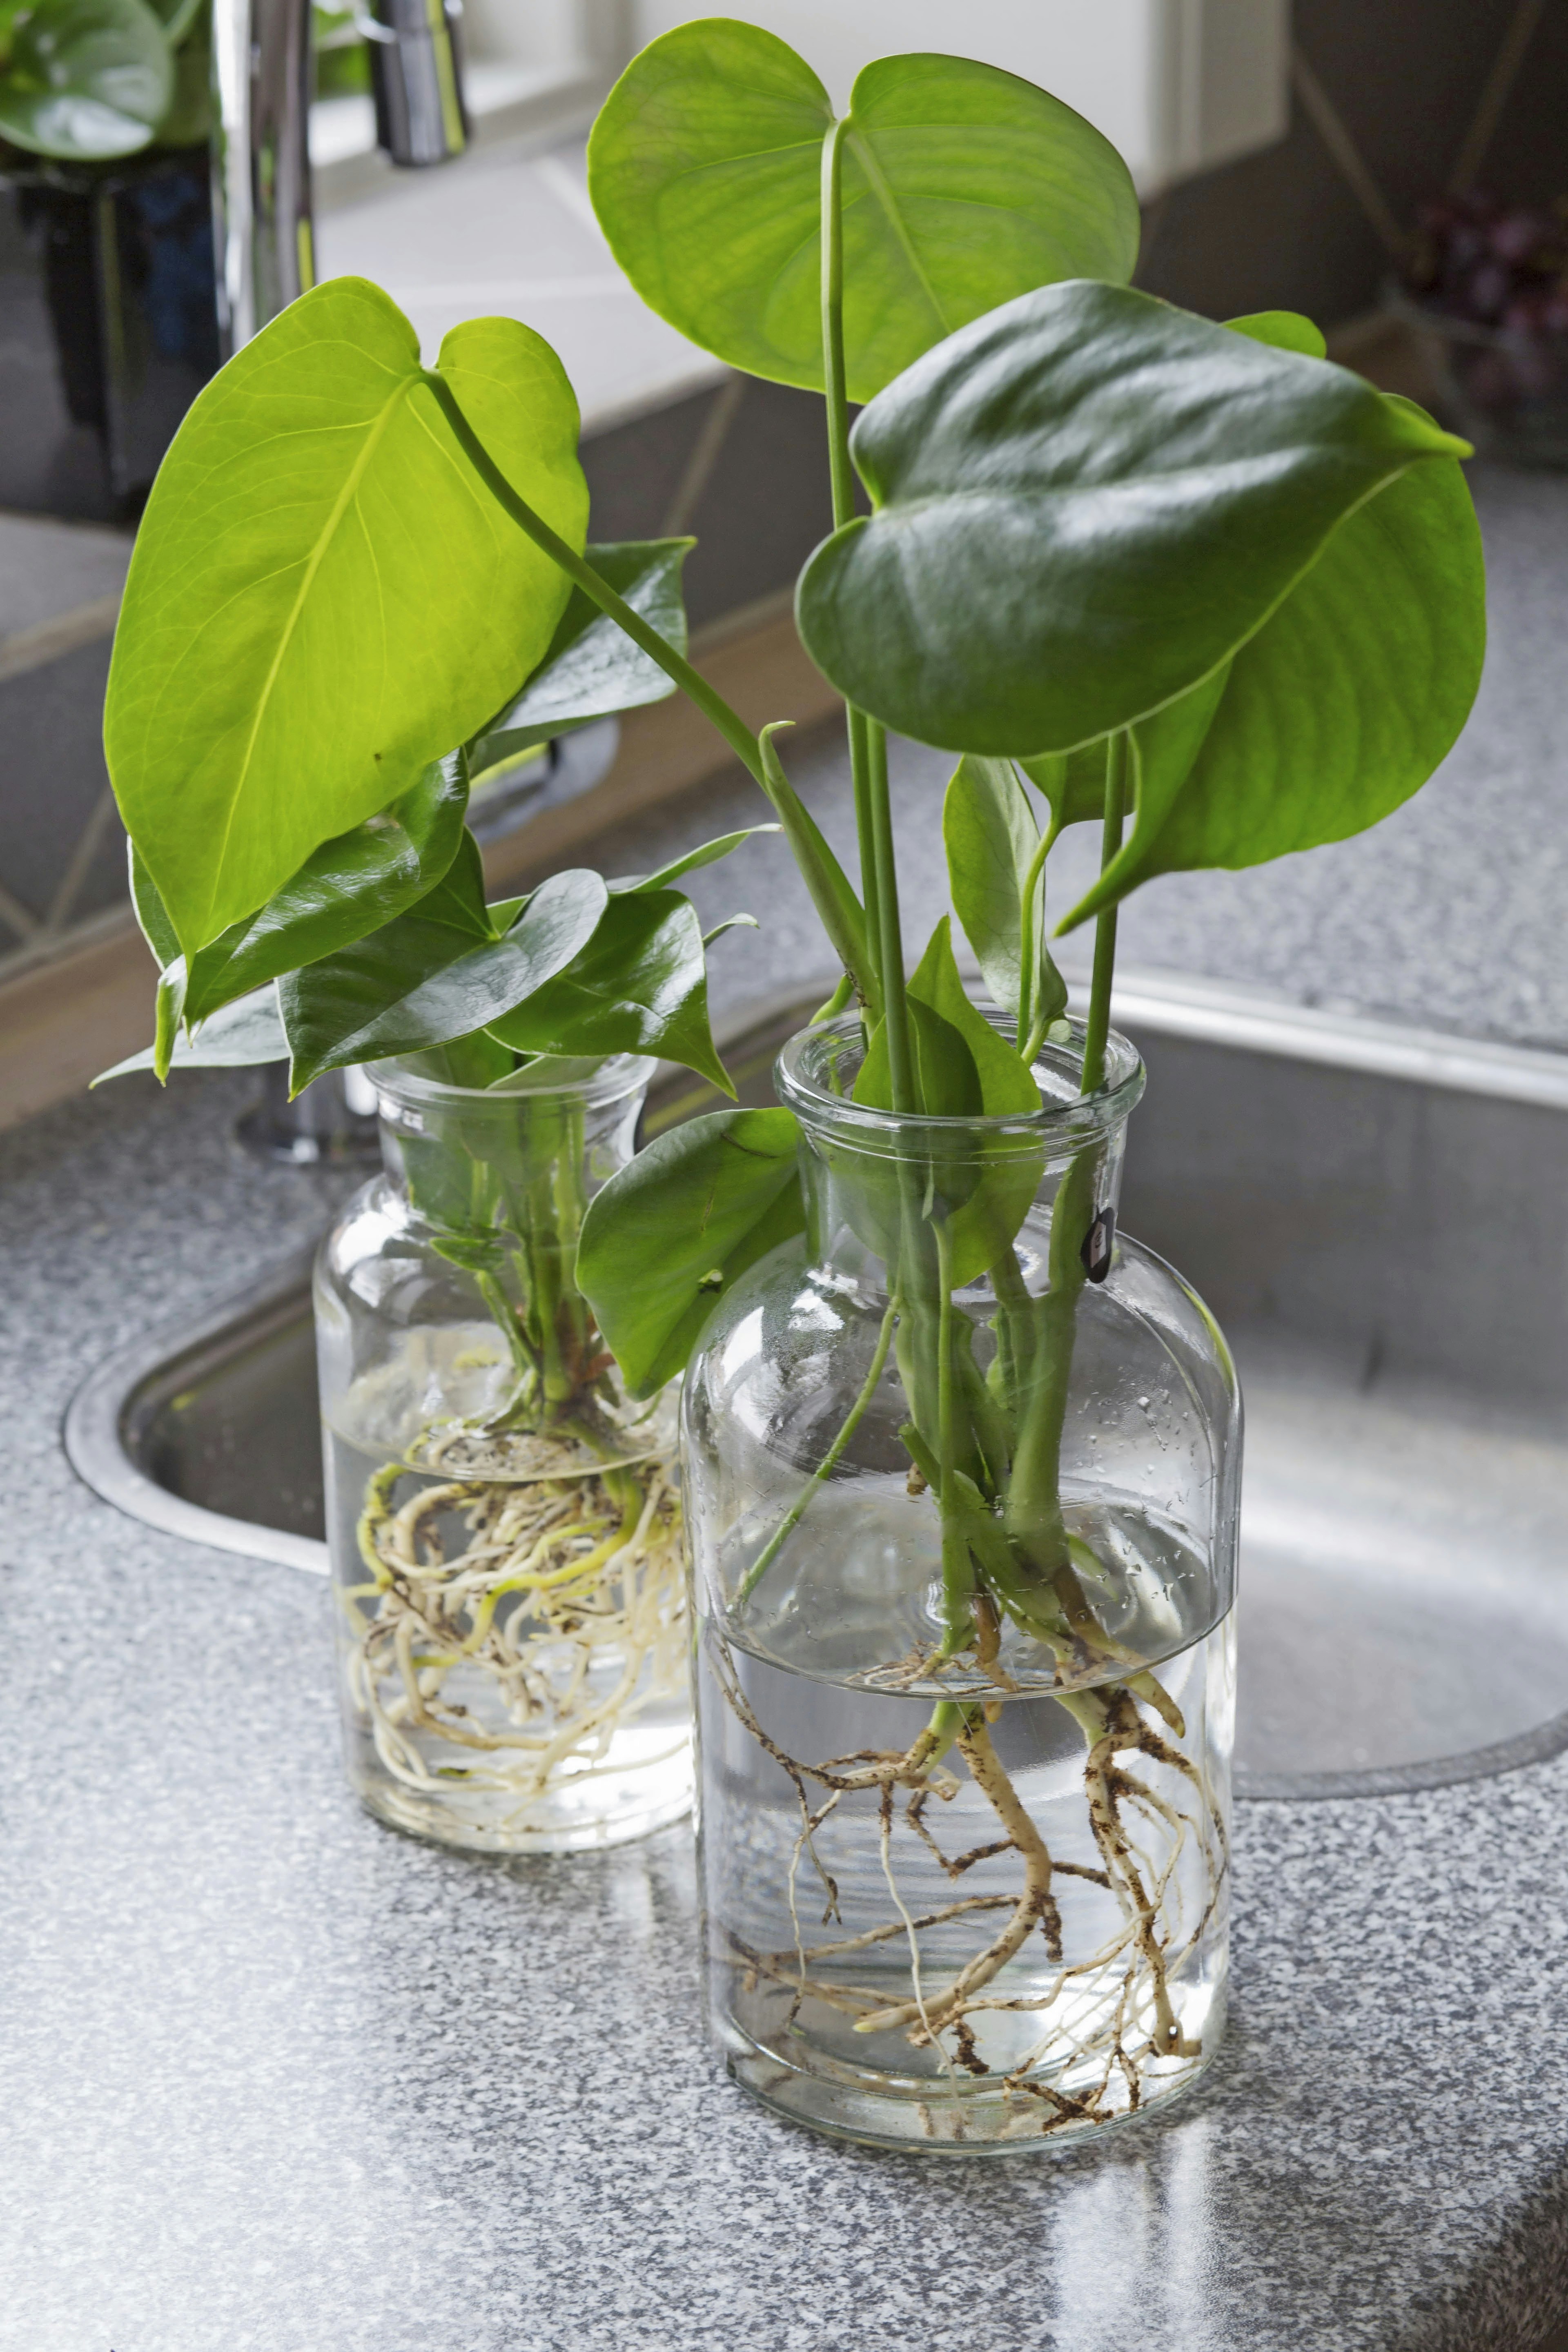 Hydroponisk dyrkning: Dyrk grønne planter i |